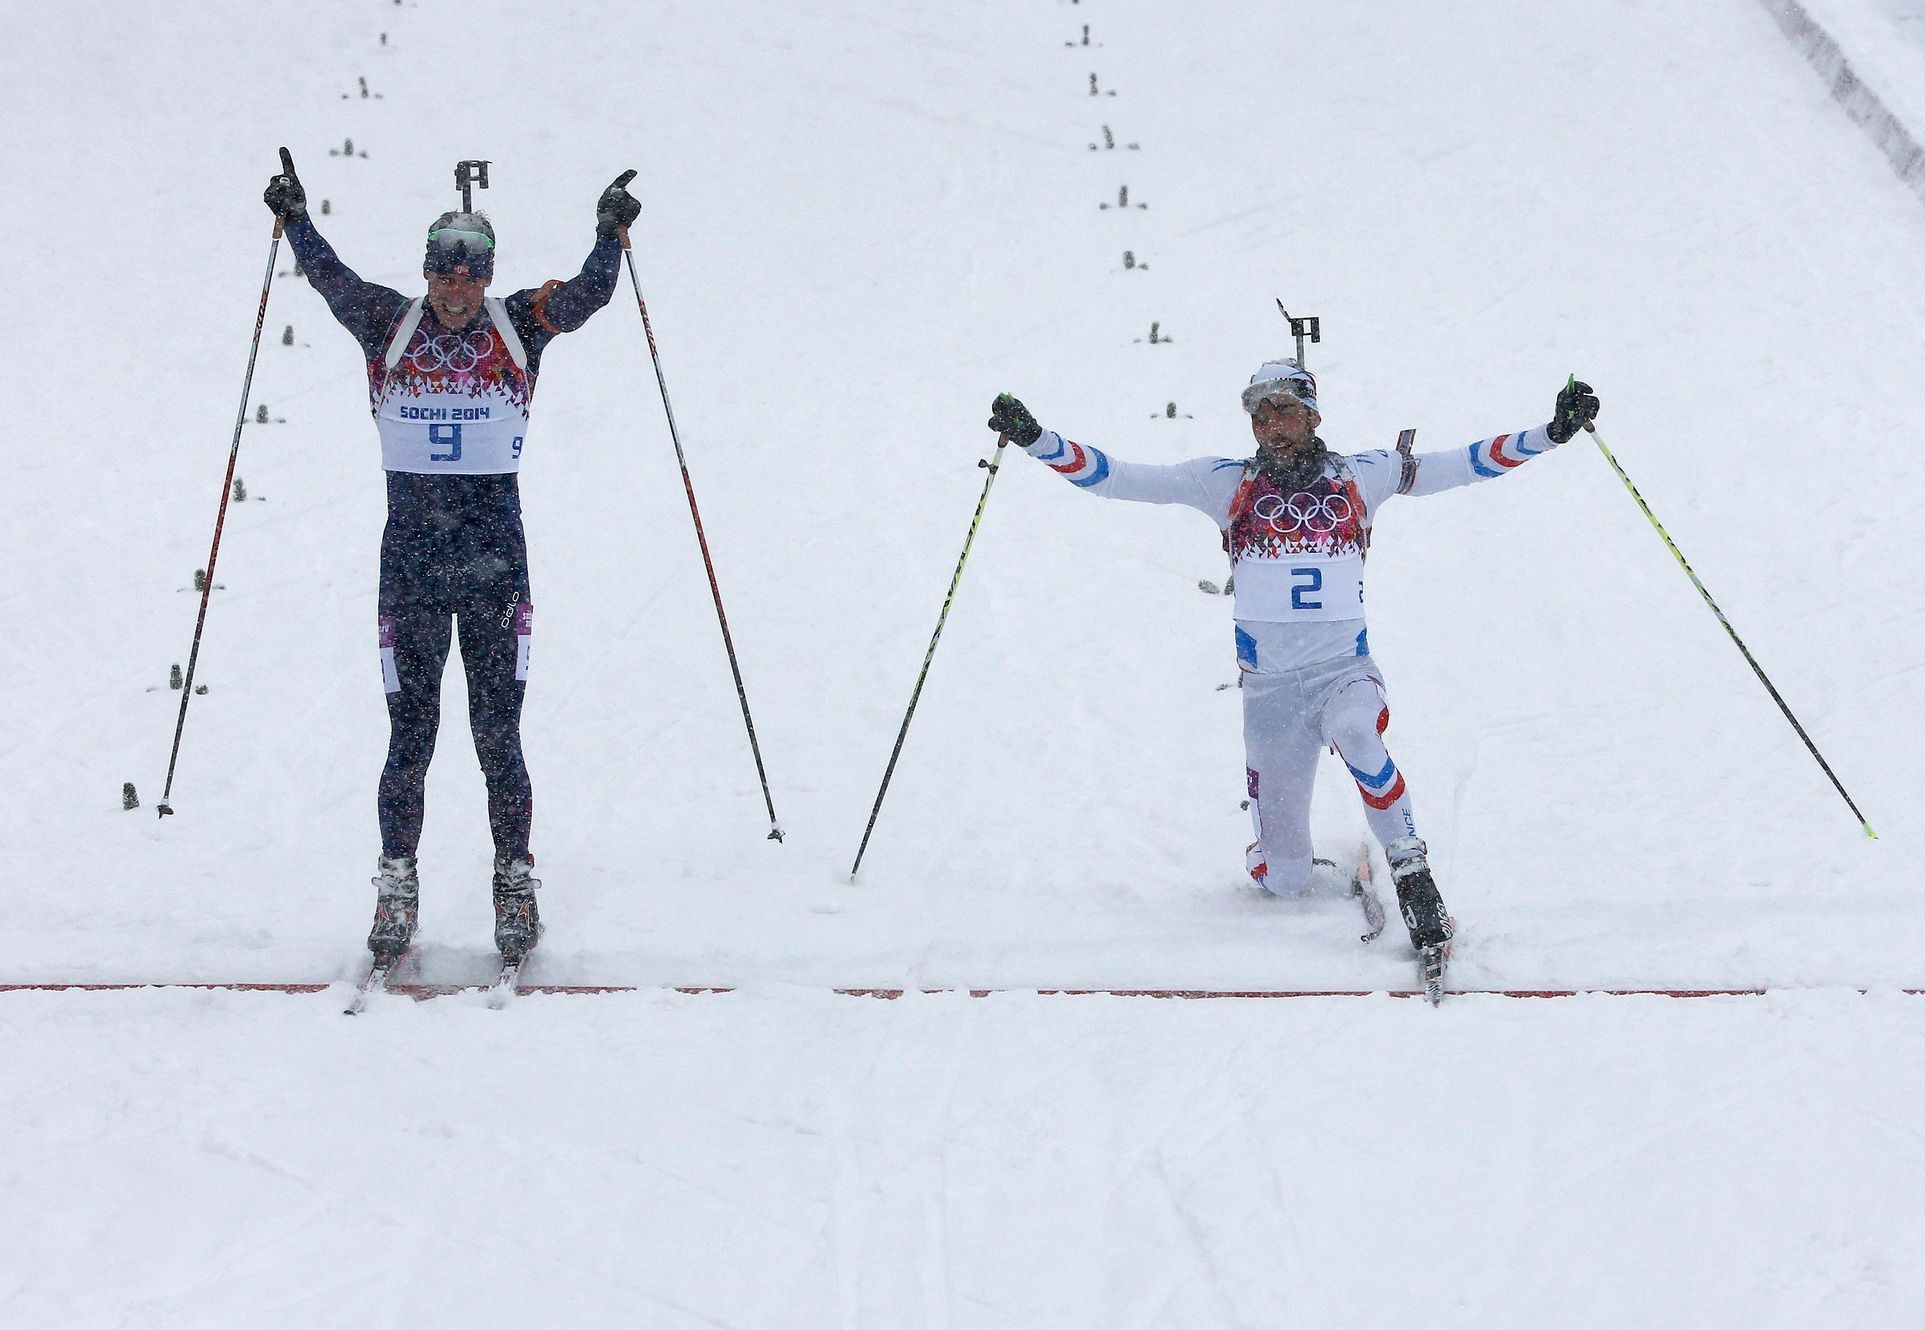 Soči 2014, biatlon hromadný start M: Emil Hegle Svendsen (vlevo) a Martin Fourcade